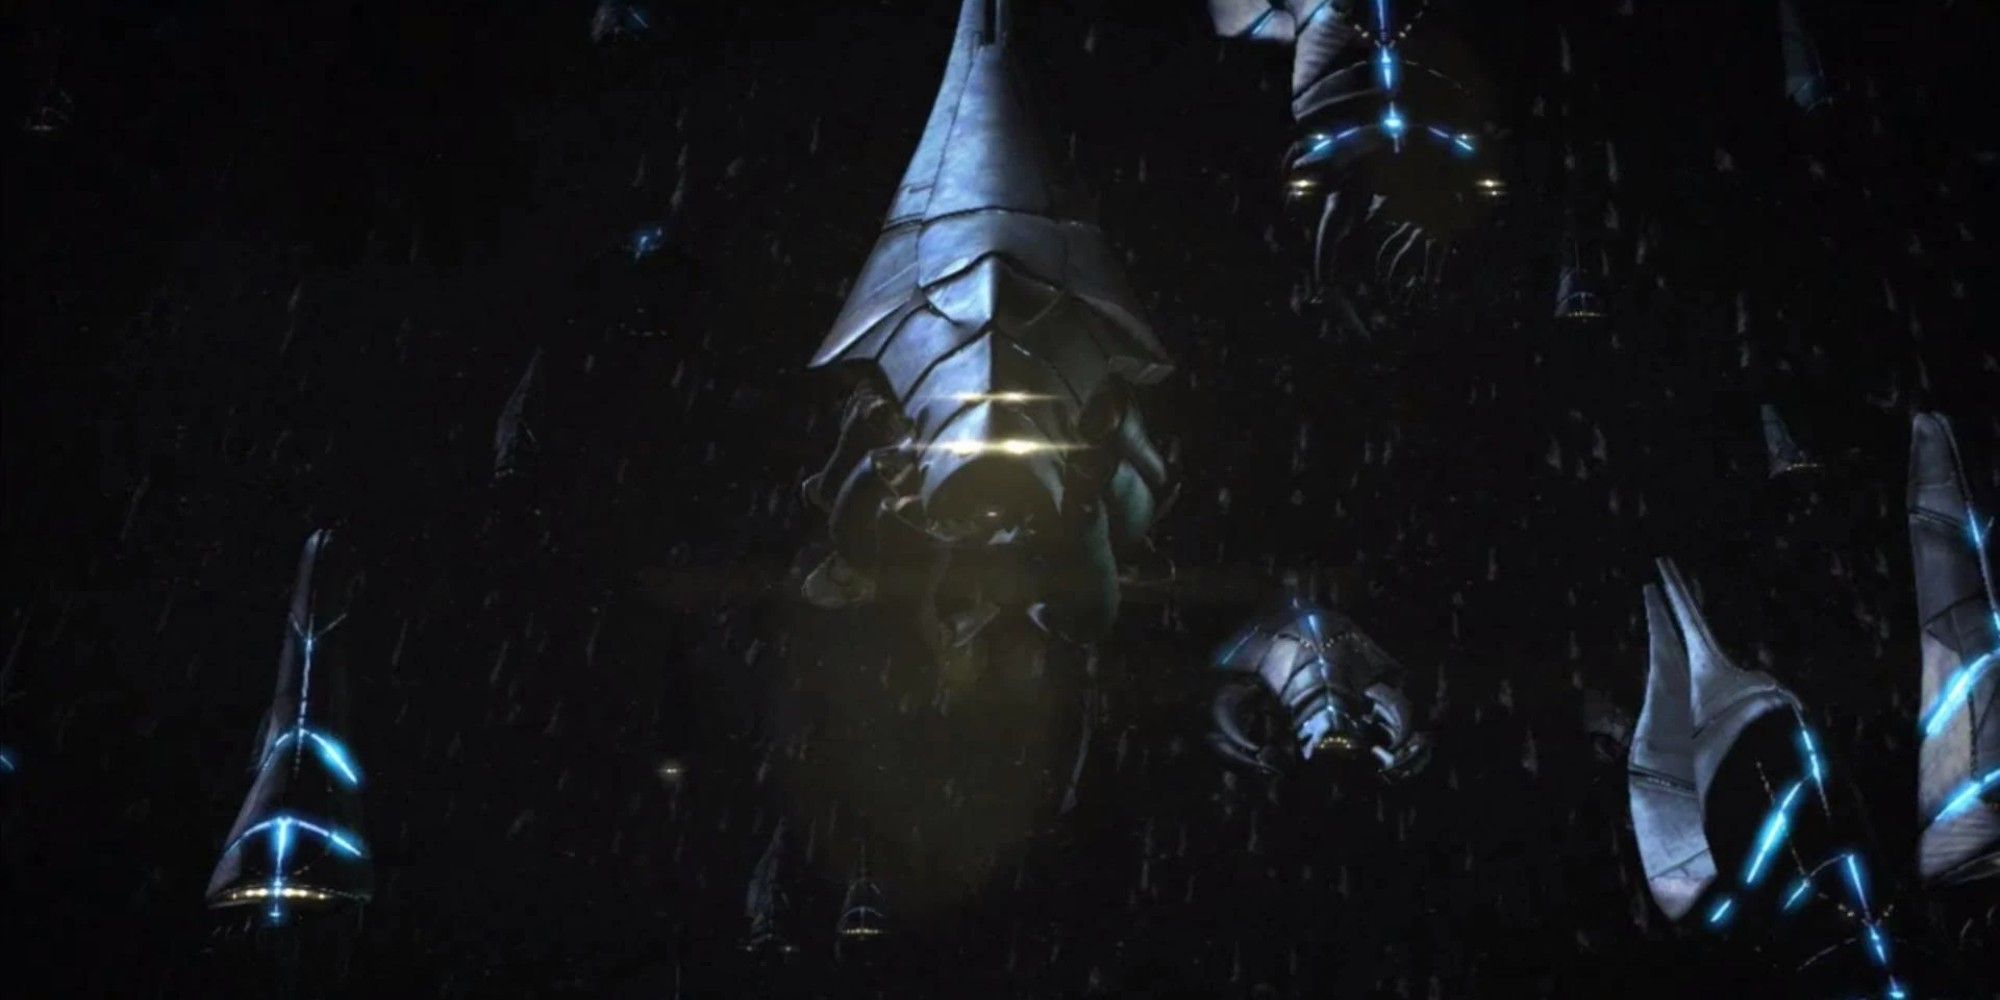 Mass Effect Reaper Fleet coming to destroy intelligent life